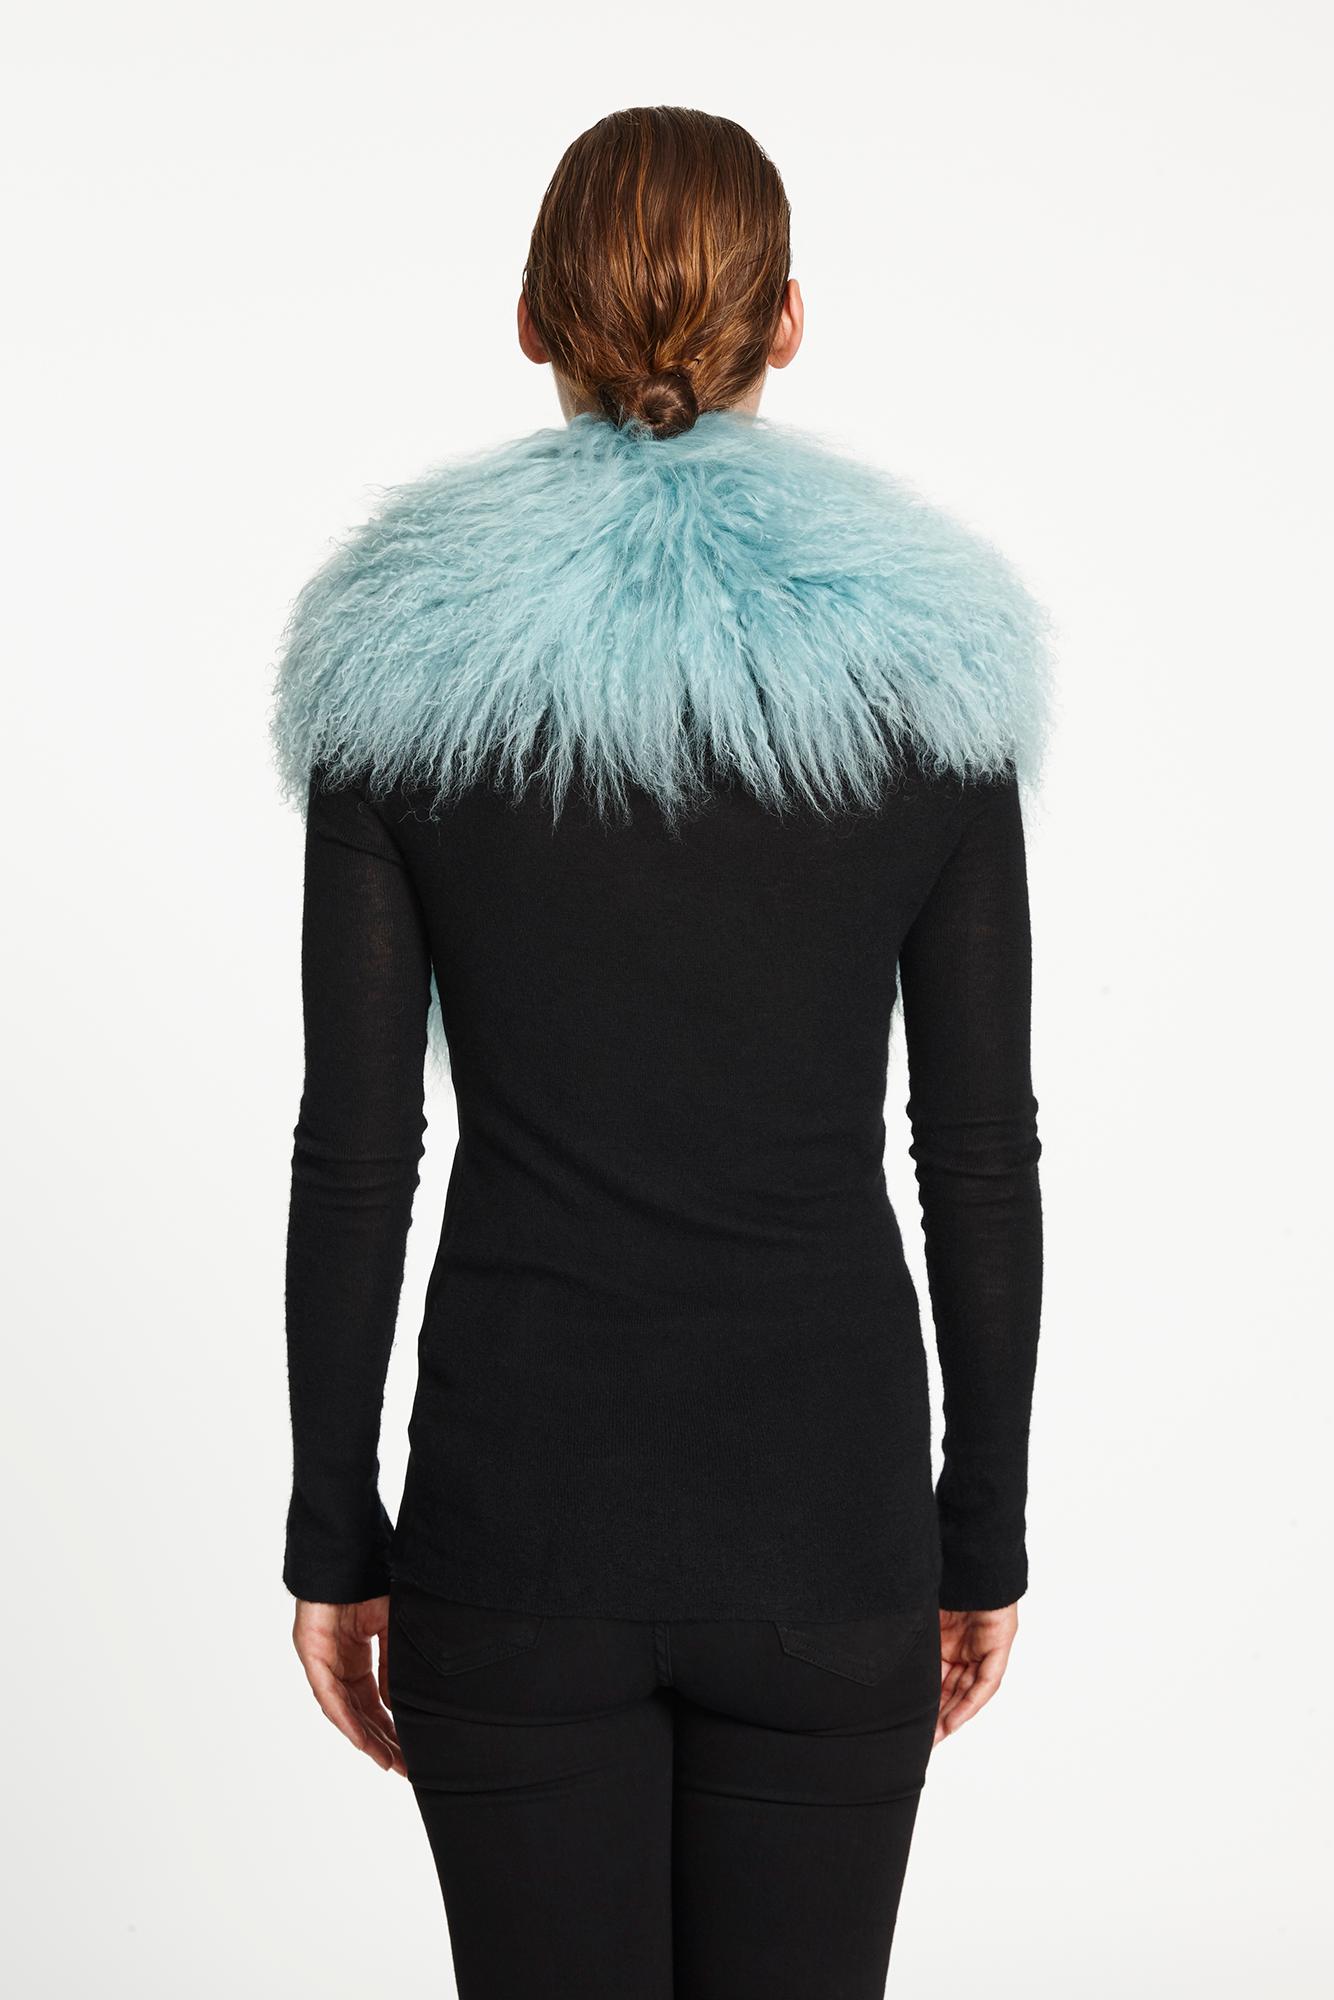 Verheyen London Shawl Collar in Aquamarine Blue Mongolian Lamb Fur  - Brand New  2